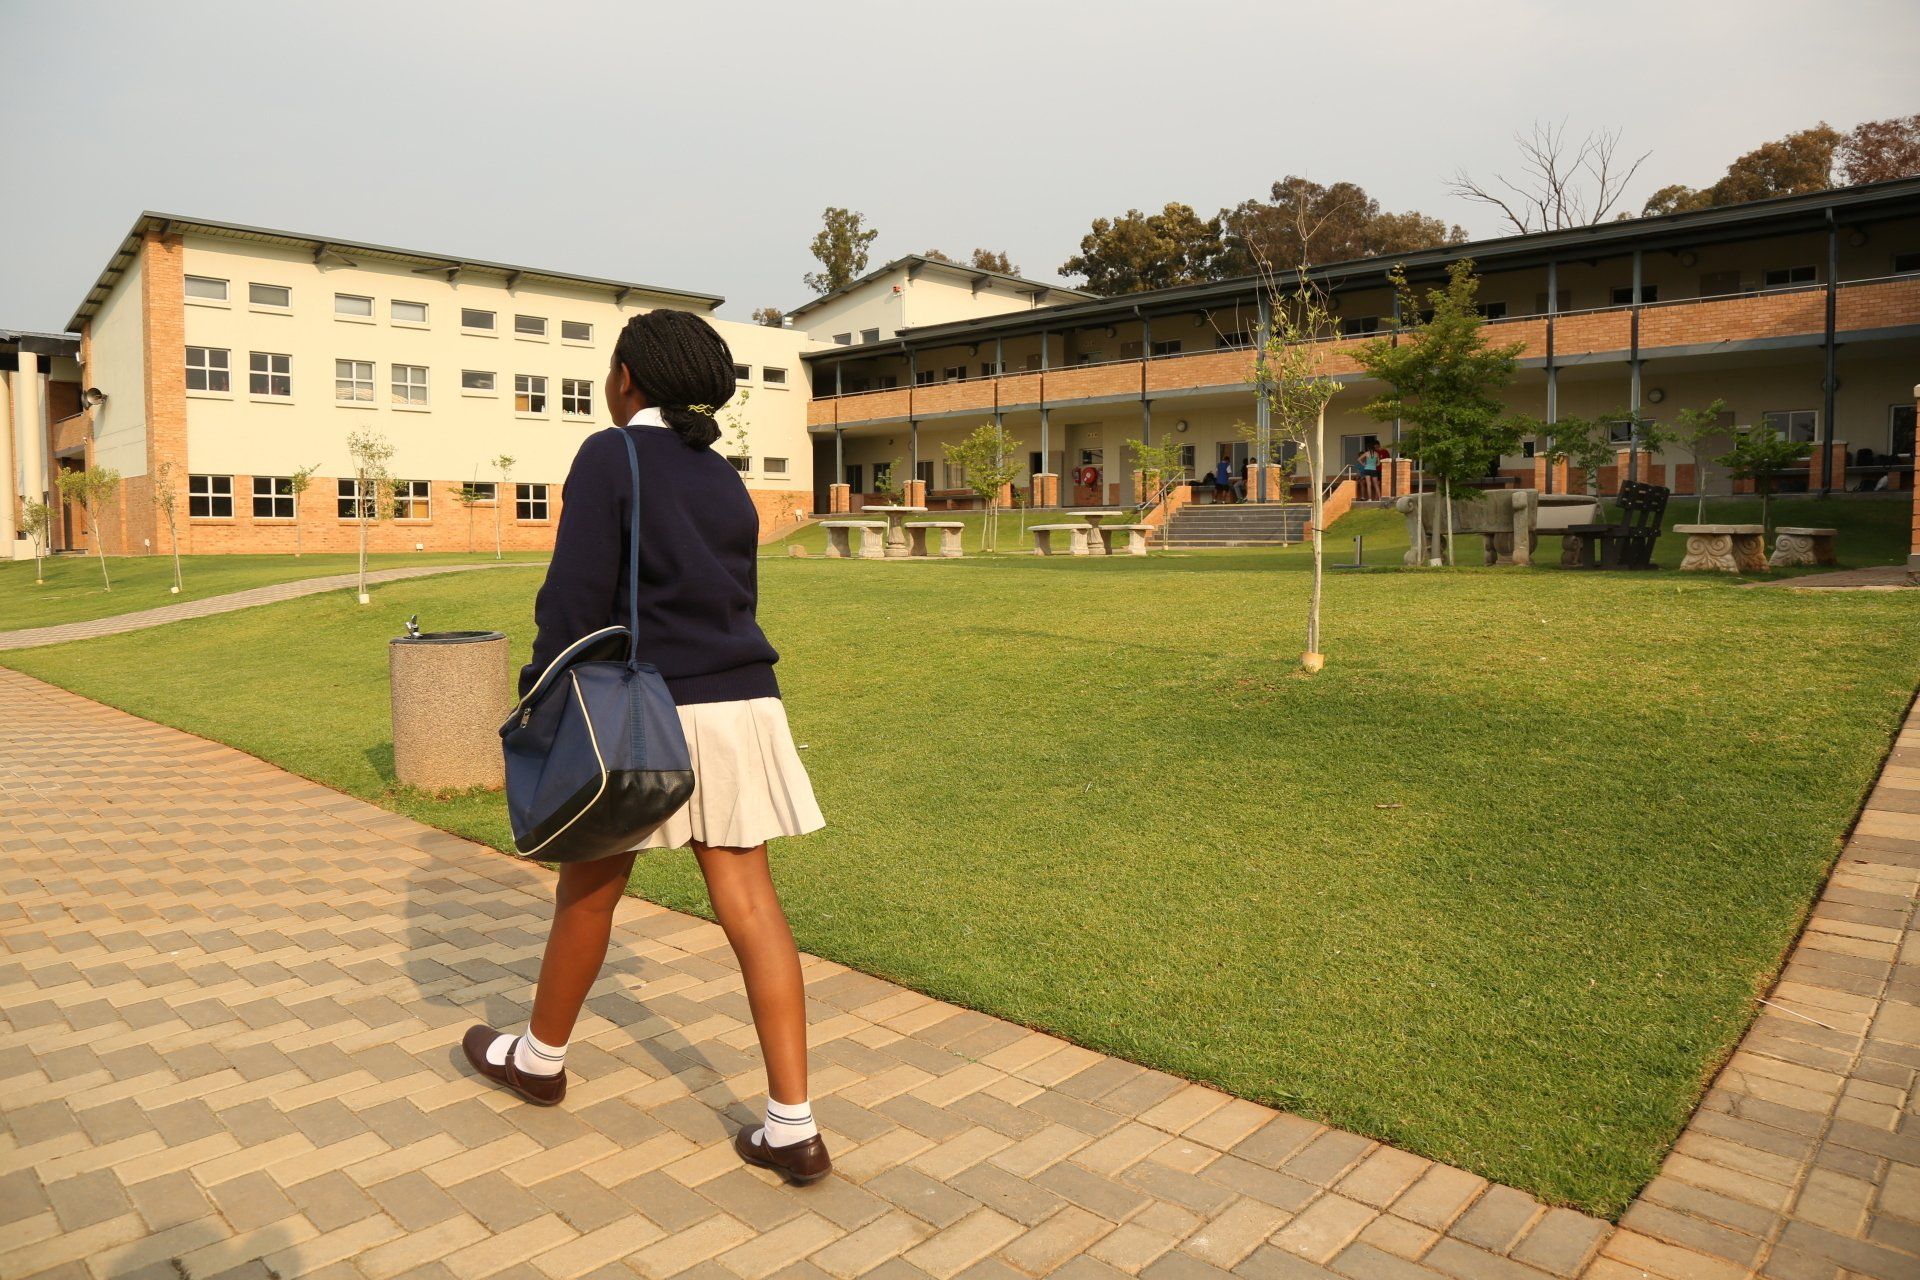 a girl is walking down a sidewalk in front of a school building .